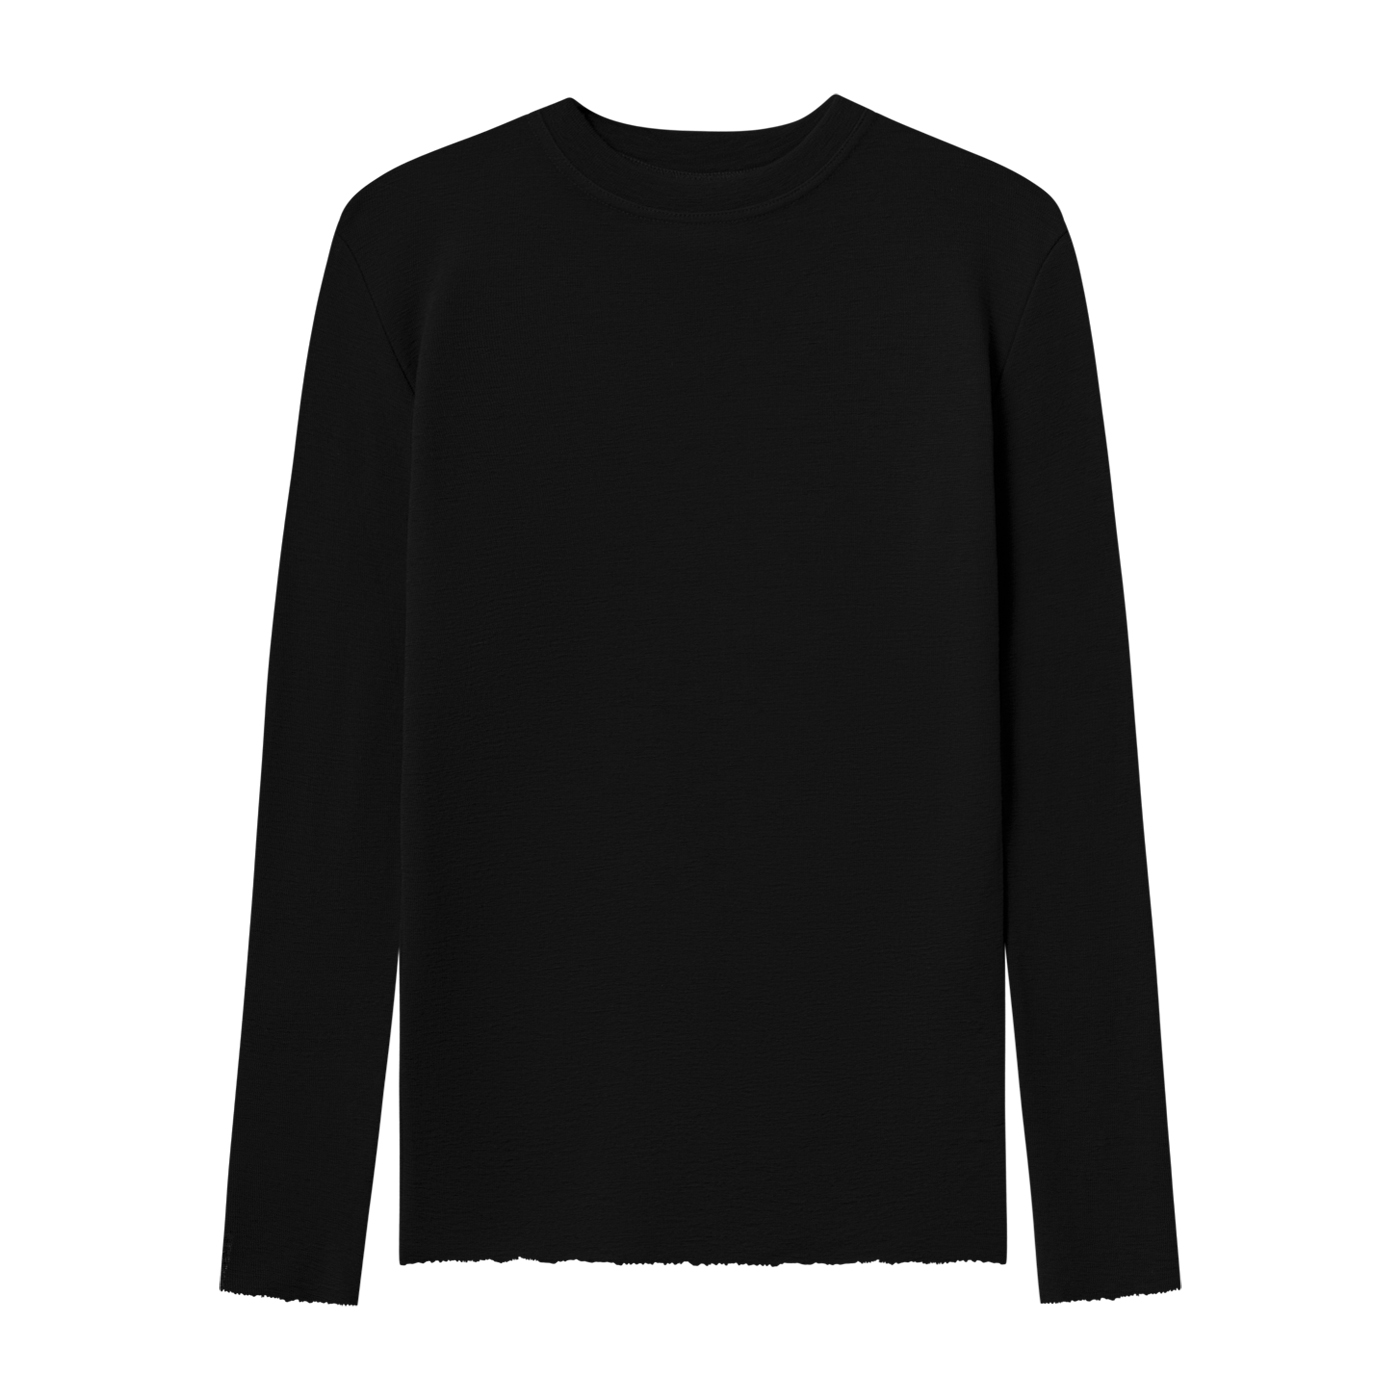 Blusbar bluse øko-tex merino uld "Black 4044"